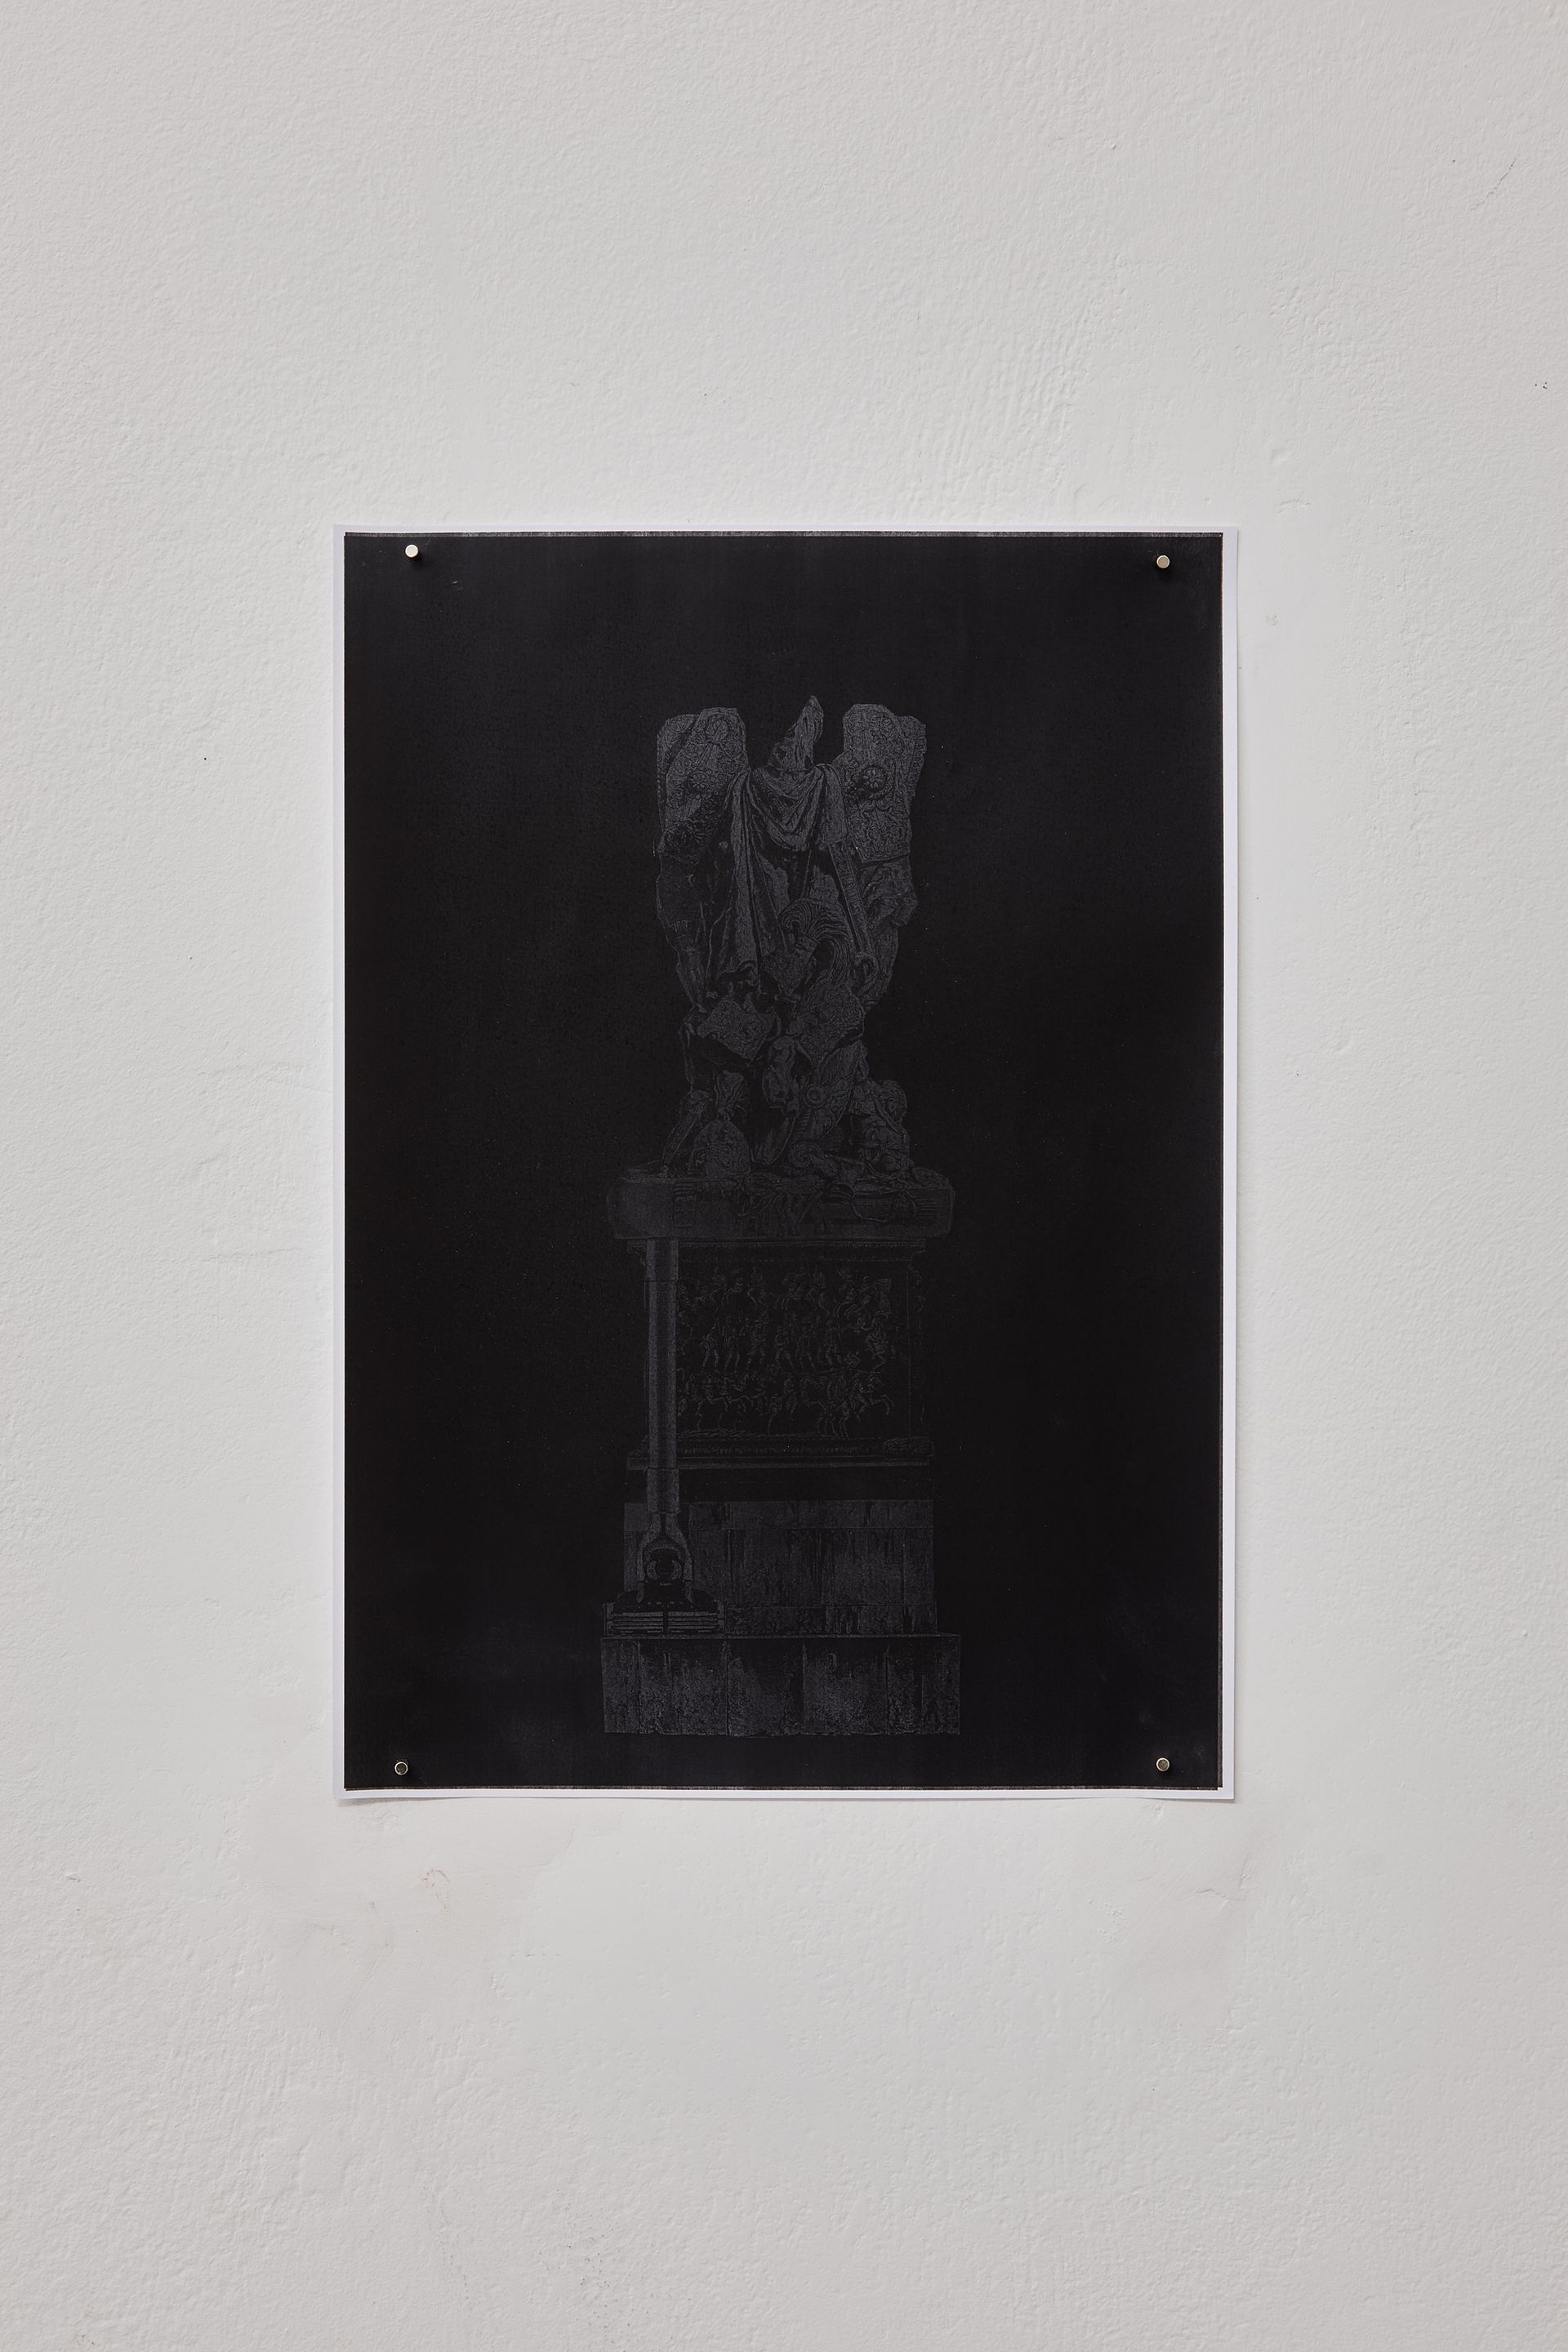 Alex Turgeon, Untitled, 2017, Xerox print on paper, 29.7 × 21.0 cm, courtesy the artist and Ashley Berlin, photo: Jan Kolsky